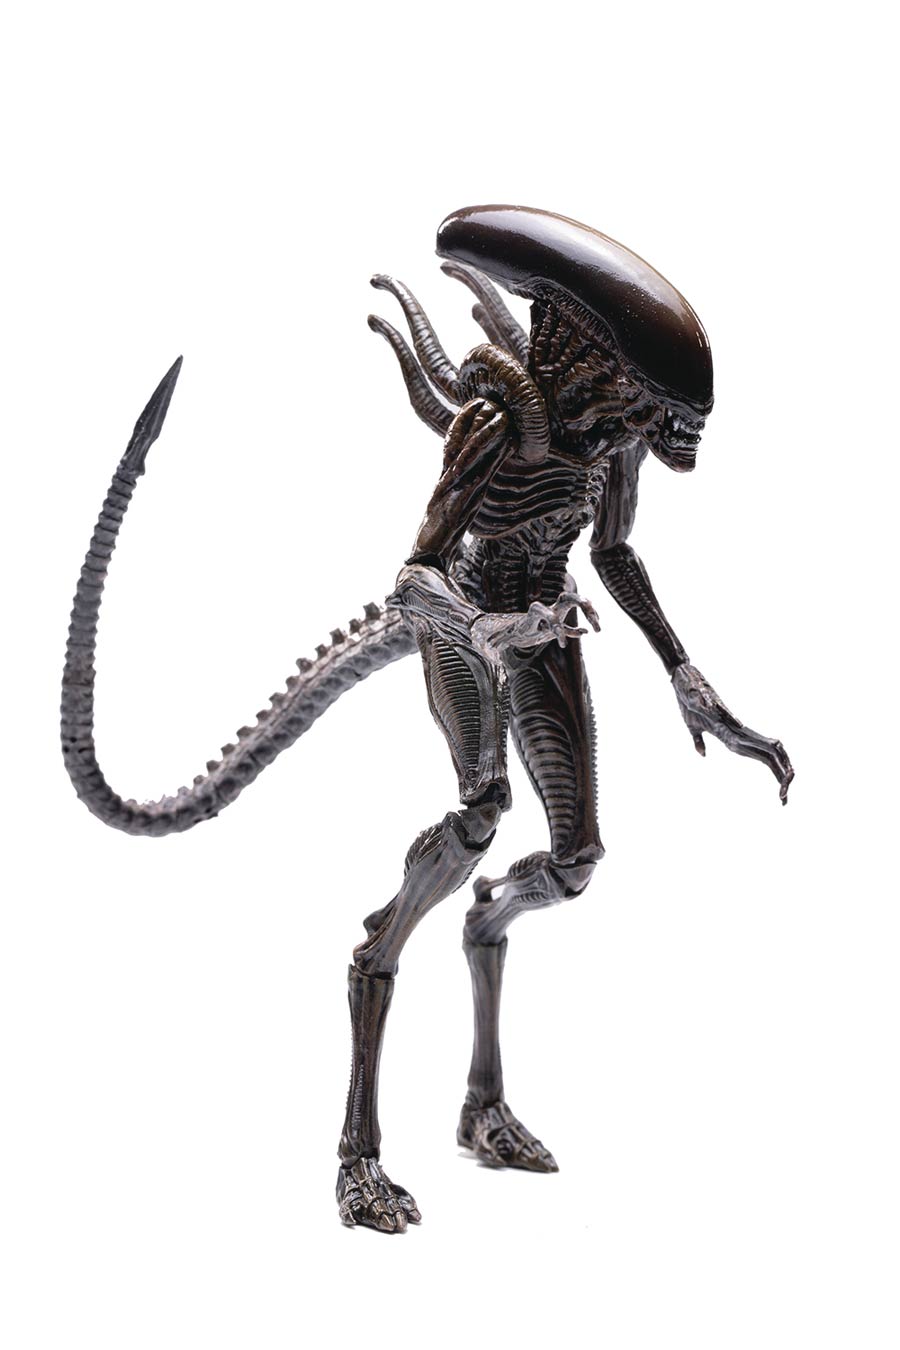 Alien Resurrection Lead Alien Warrior Previews Exclusive 4-Inch Action Figure